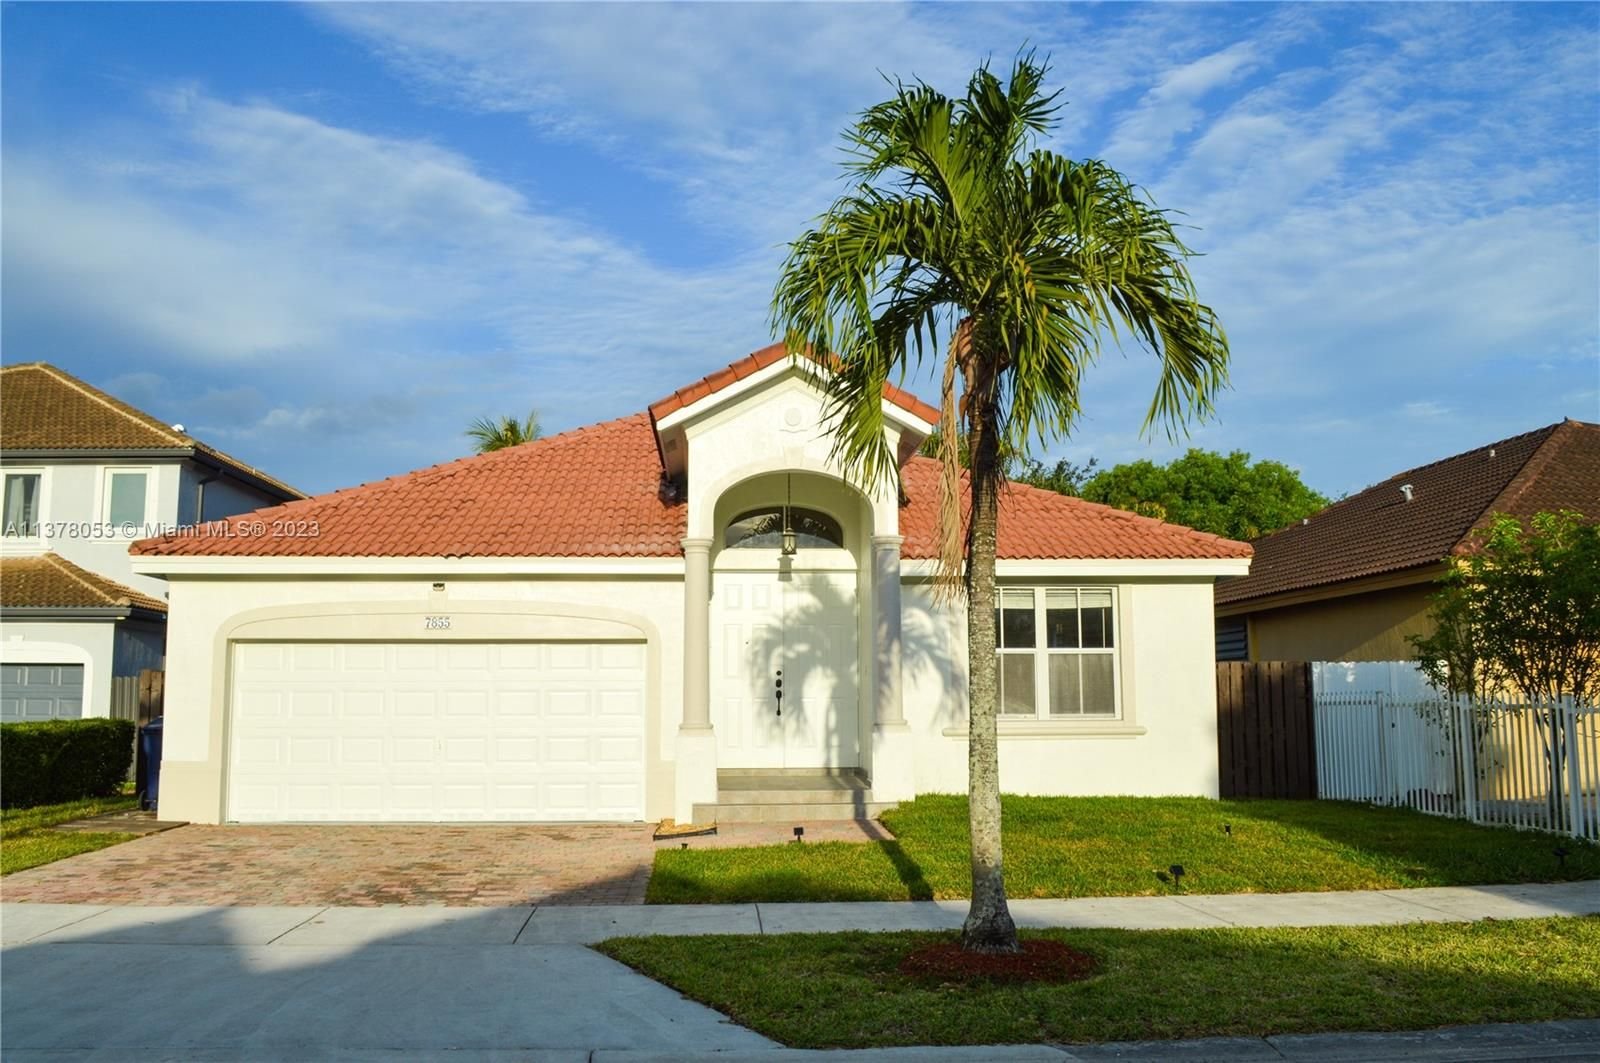 Real estate property located at 7855 164th Pl, Miami-Dade County, Miami, FL